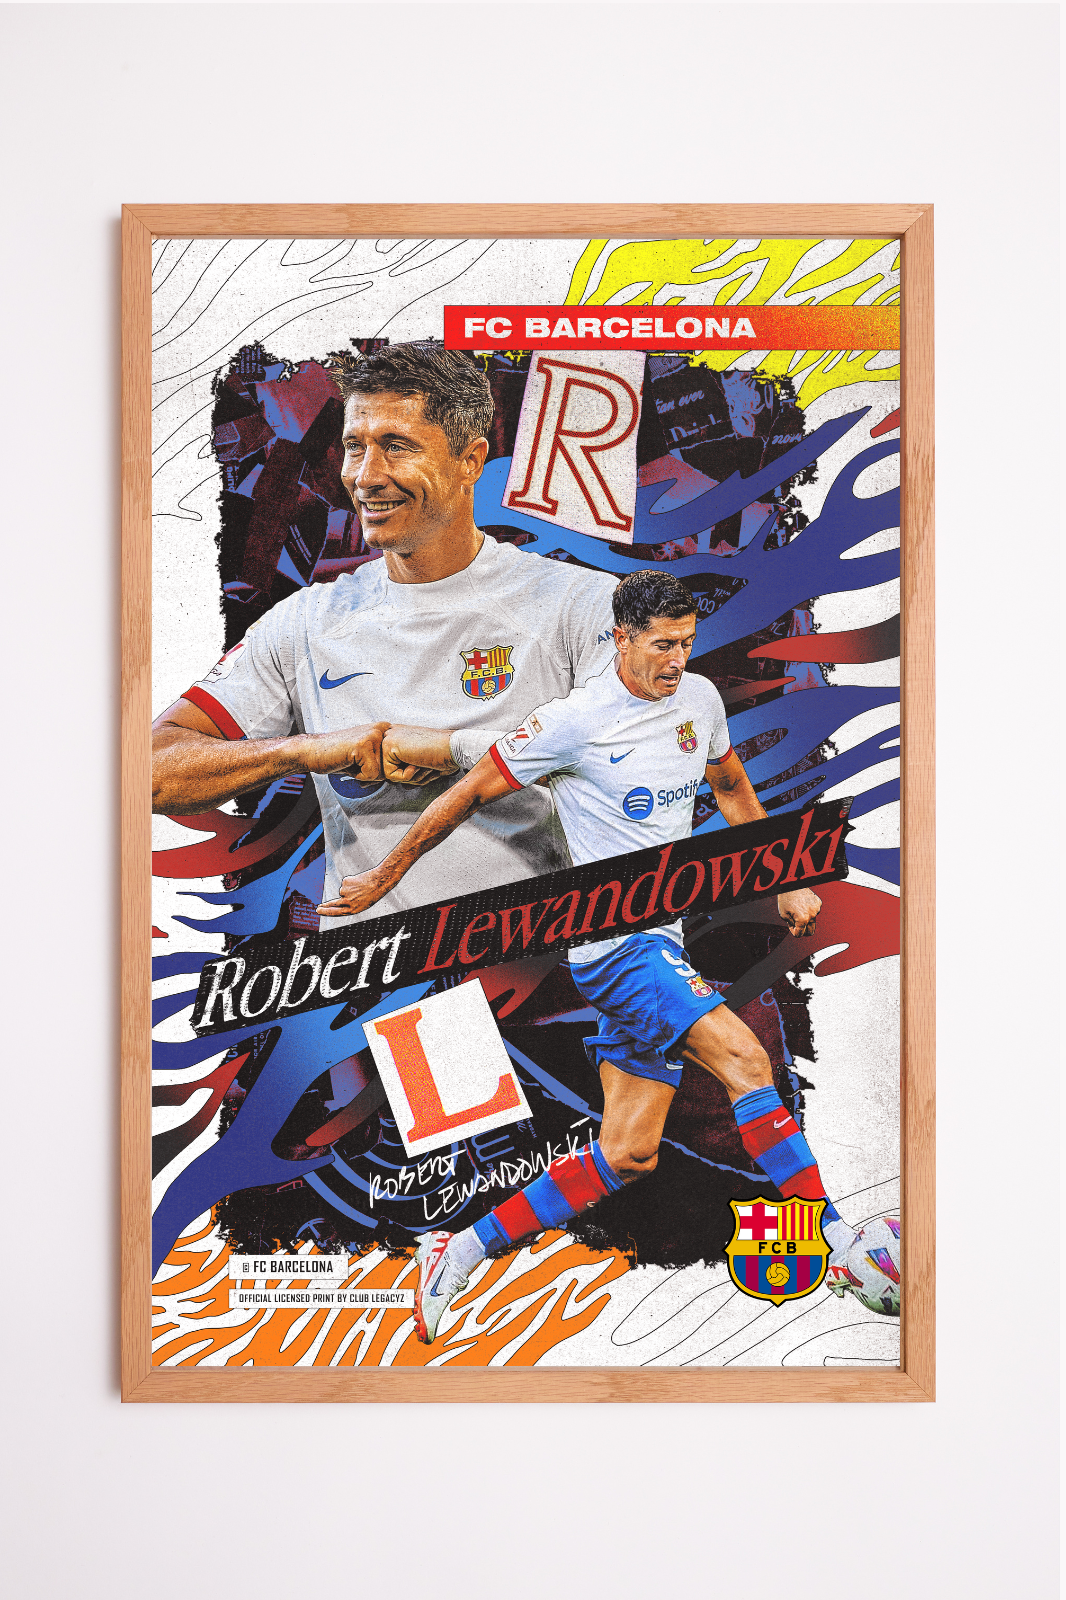 FC Barcelona - Robert Lewandowski Poster limited to 999